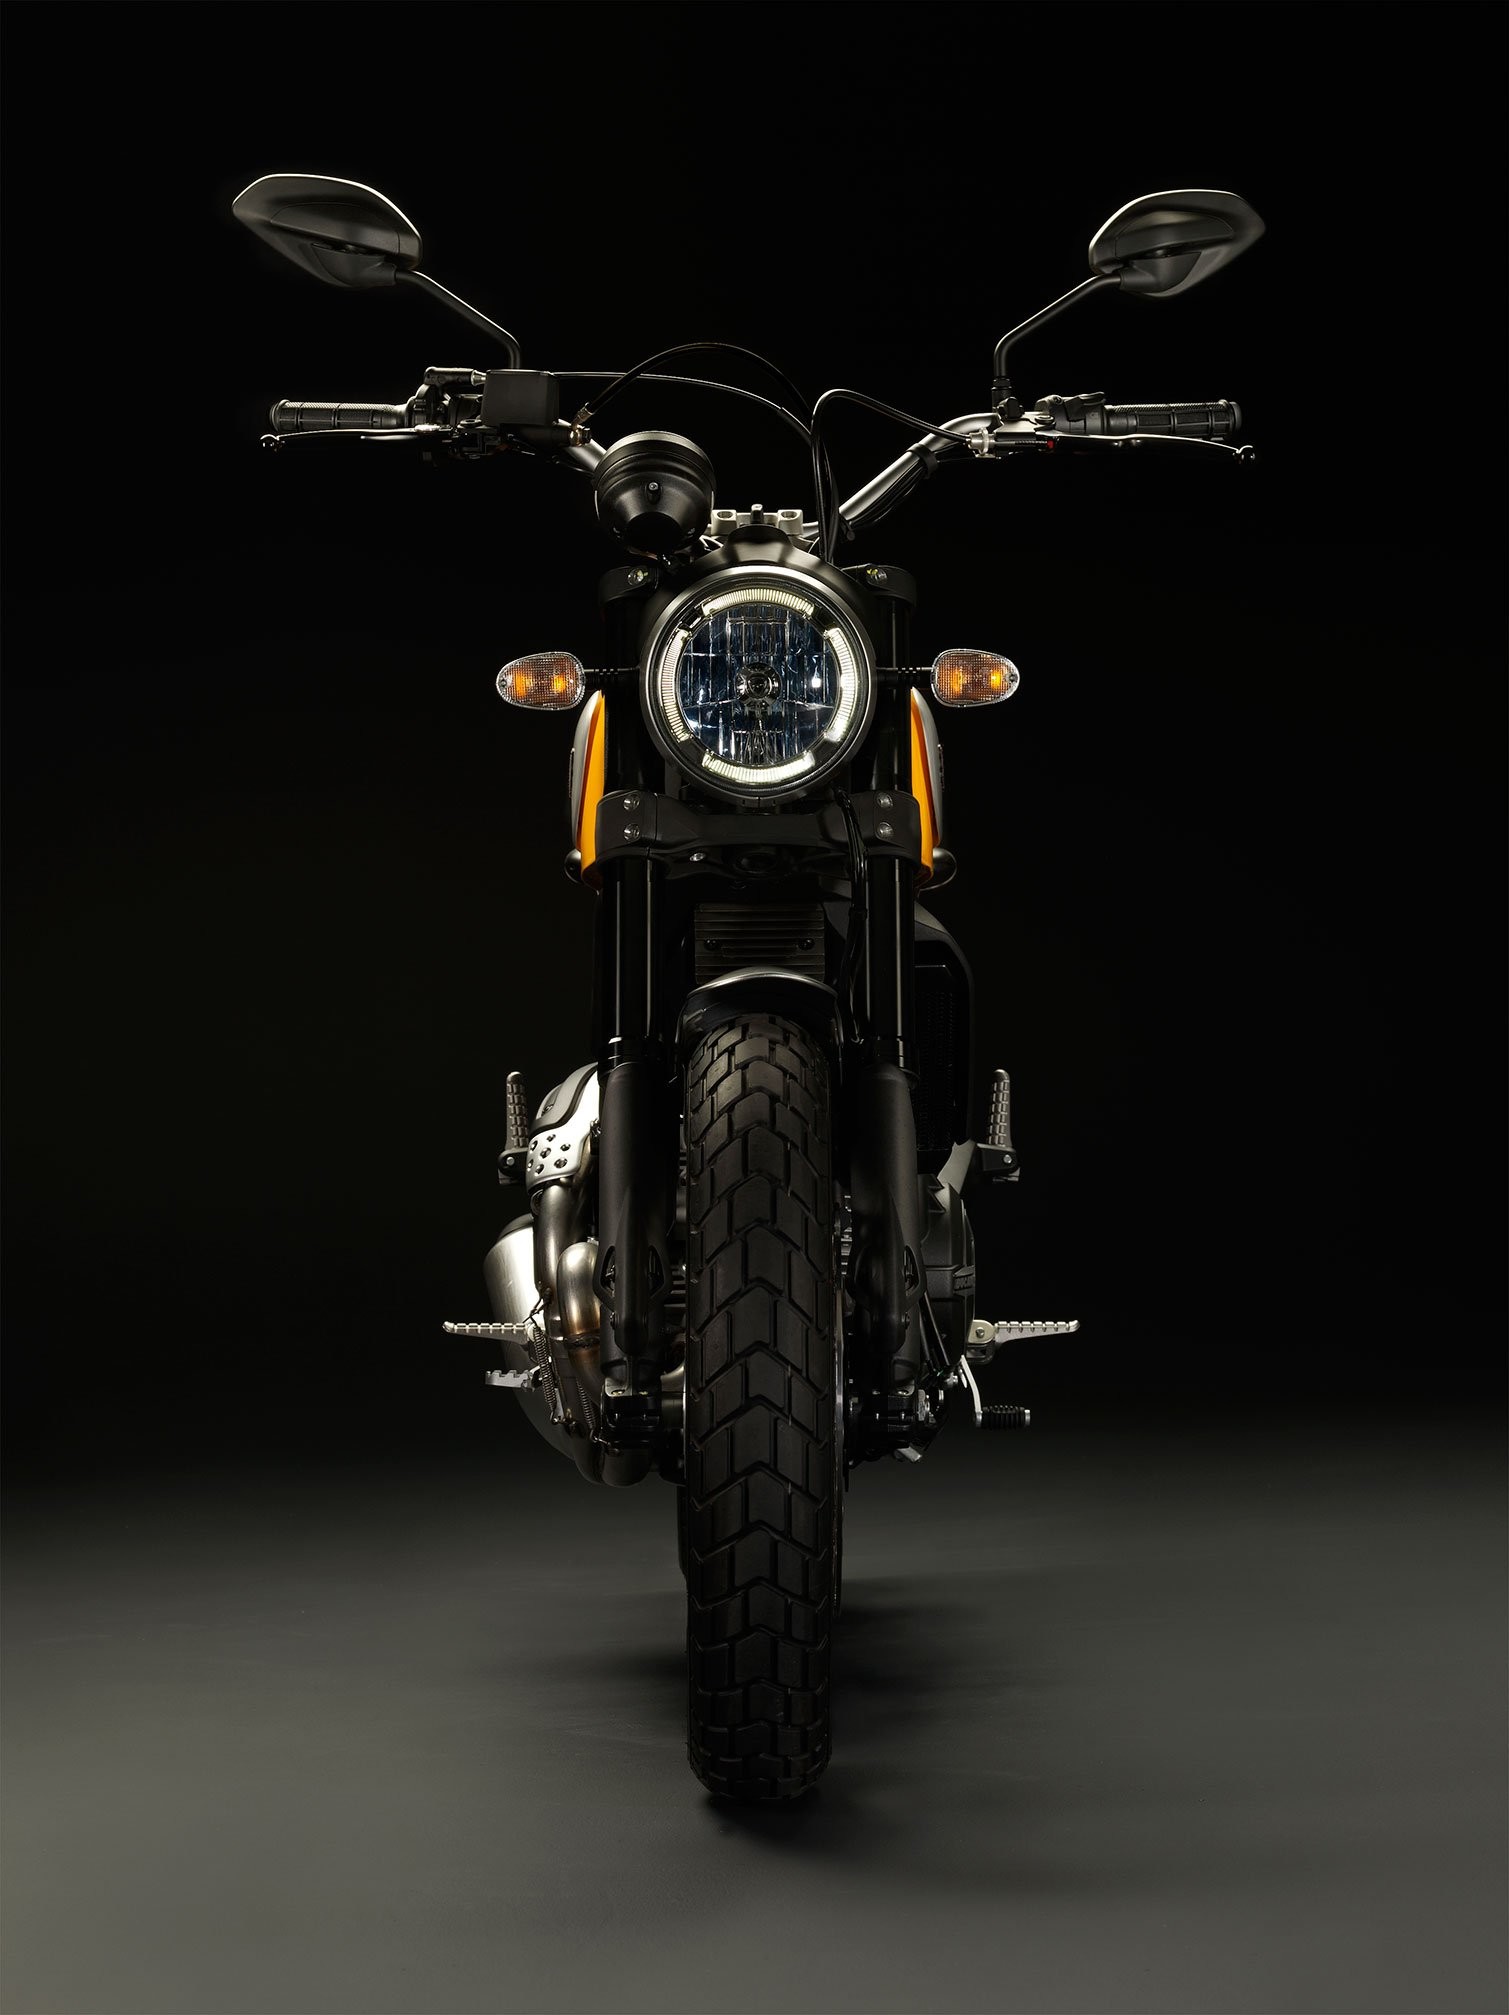 1509x2015 2015 Ducati Scrambler Classic wallpaper |  | 526211 | WallpaperUP